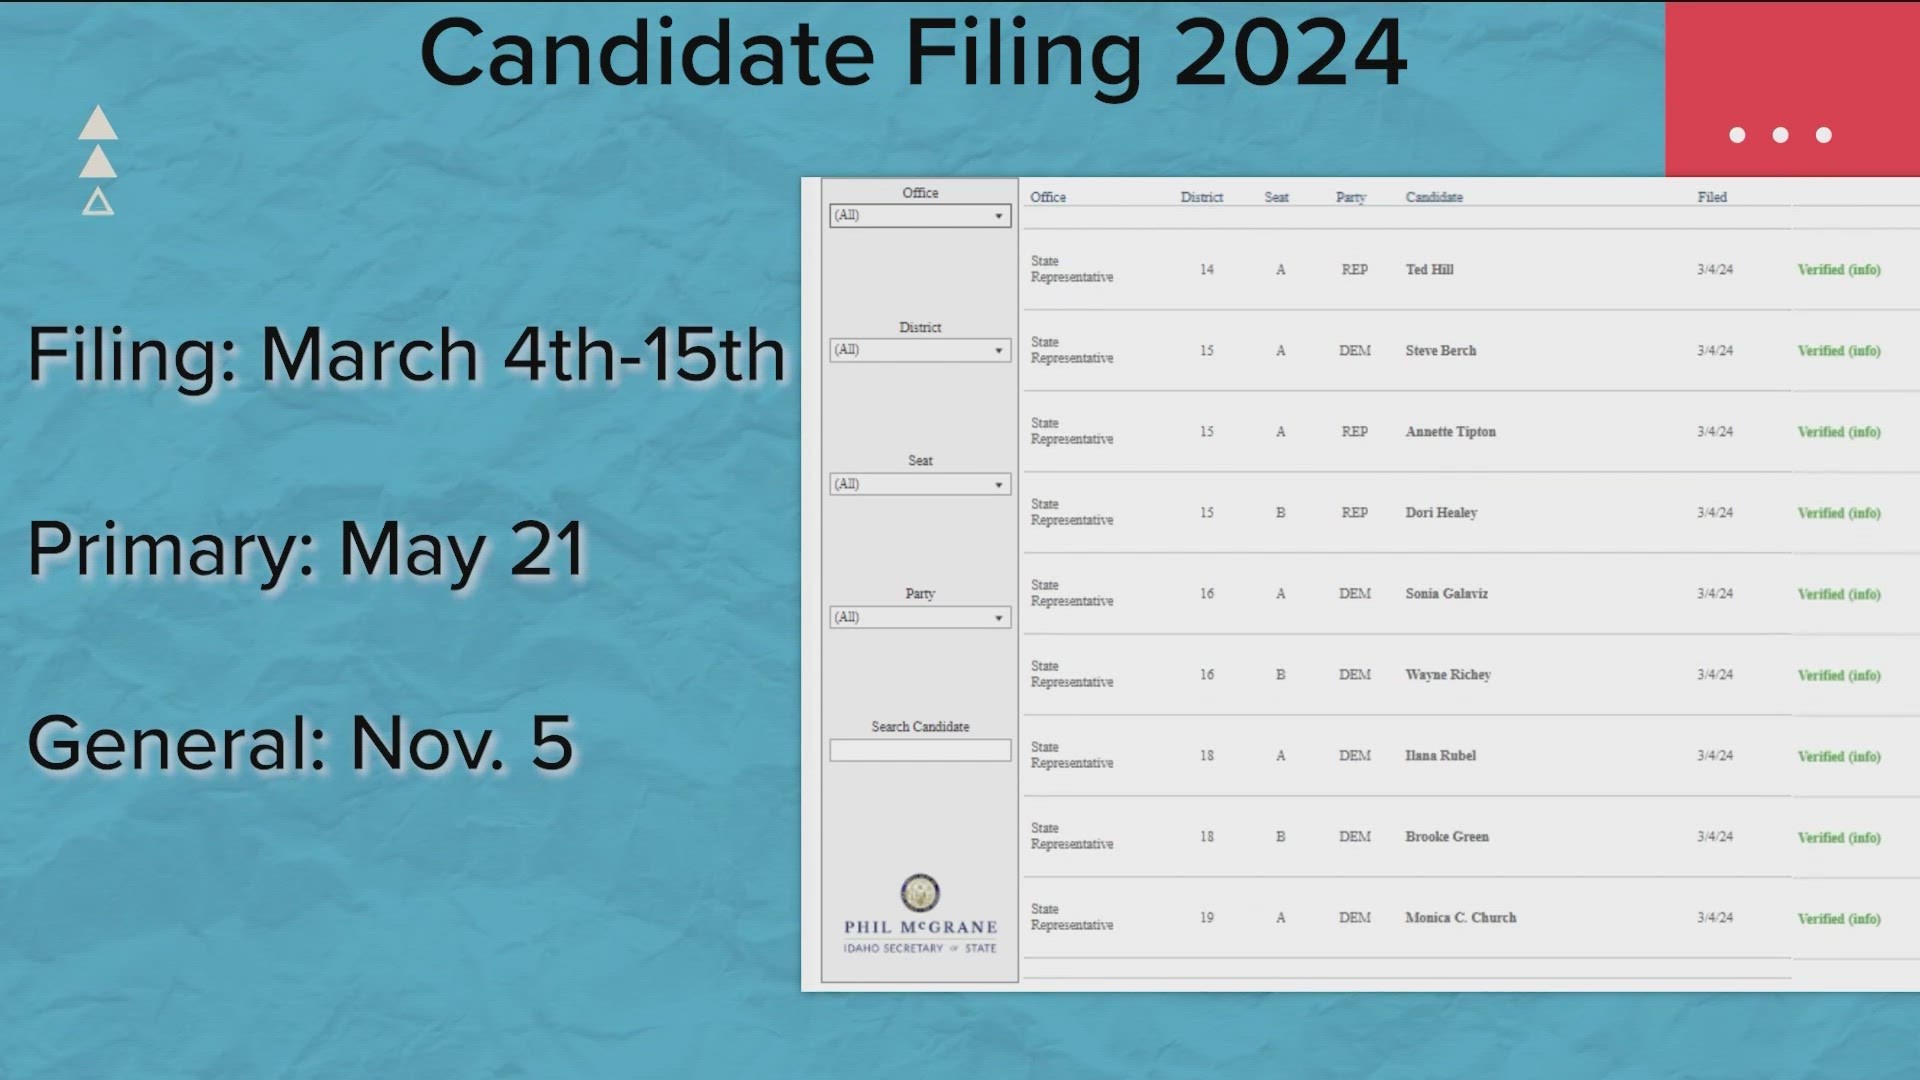 Idaho Statehouse Candidate Filing 2024 opens